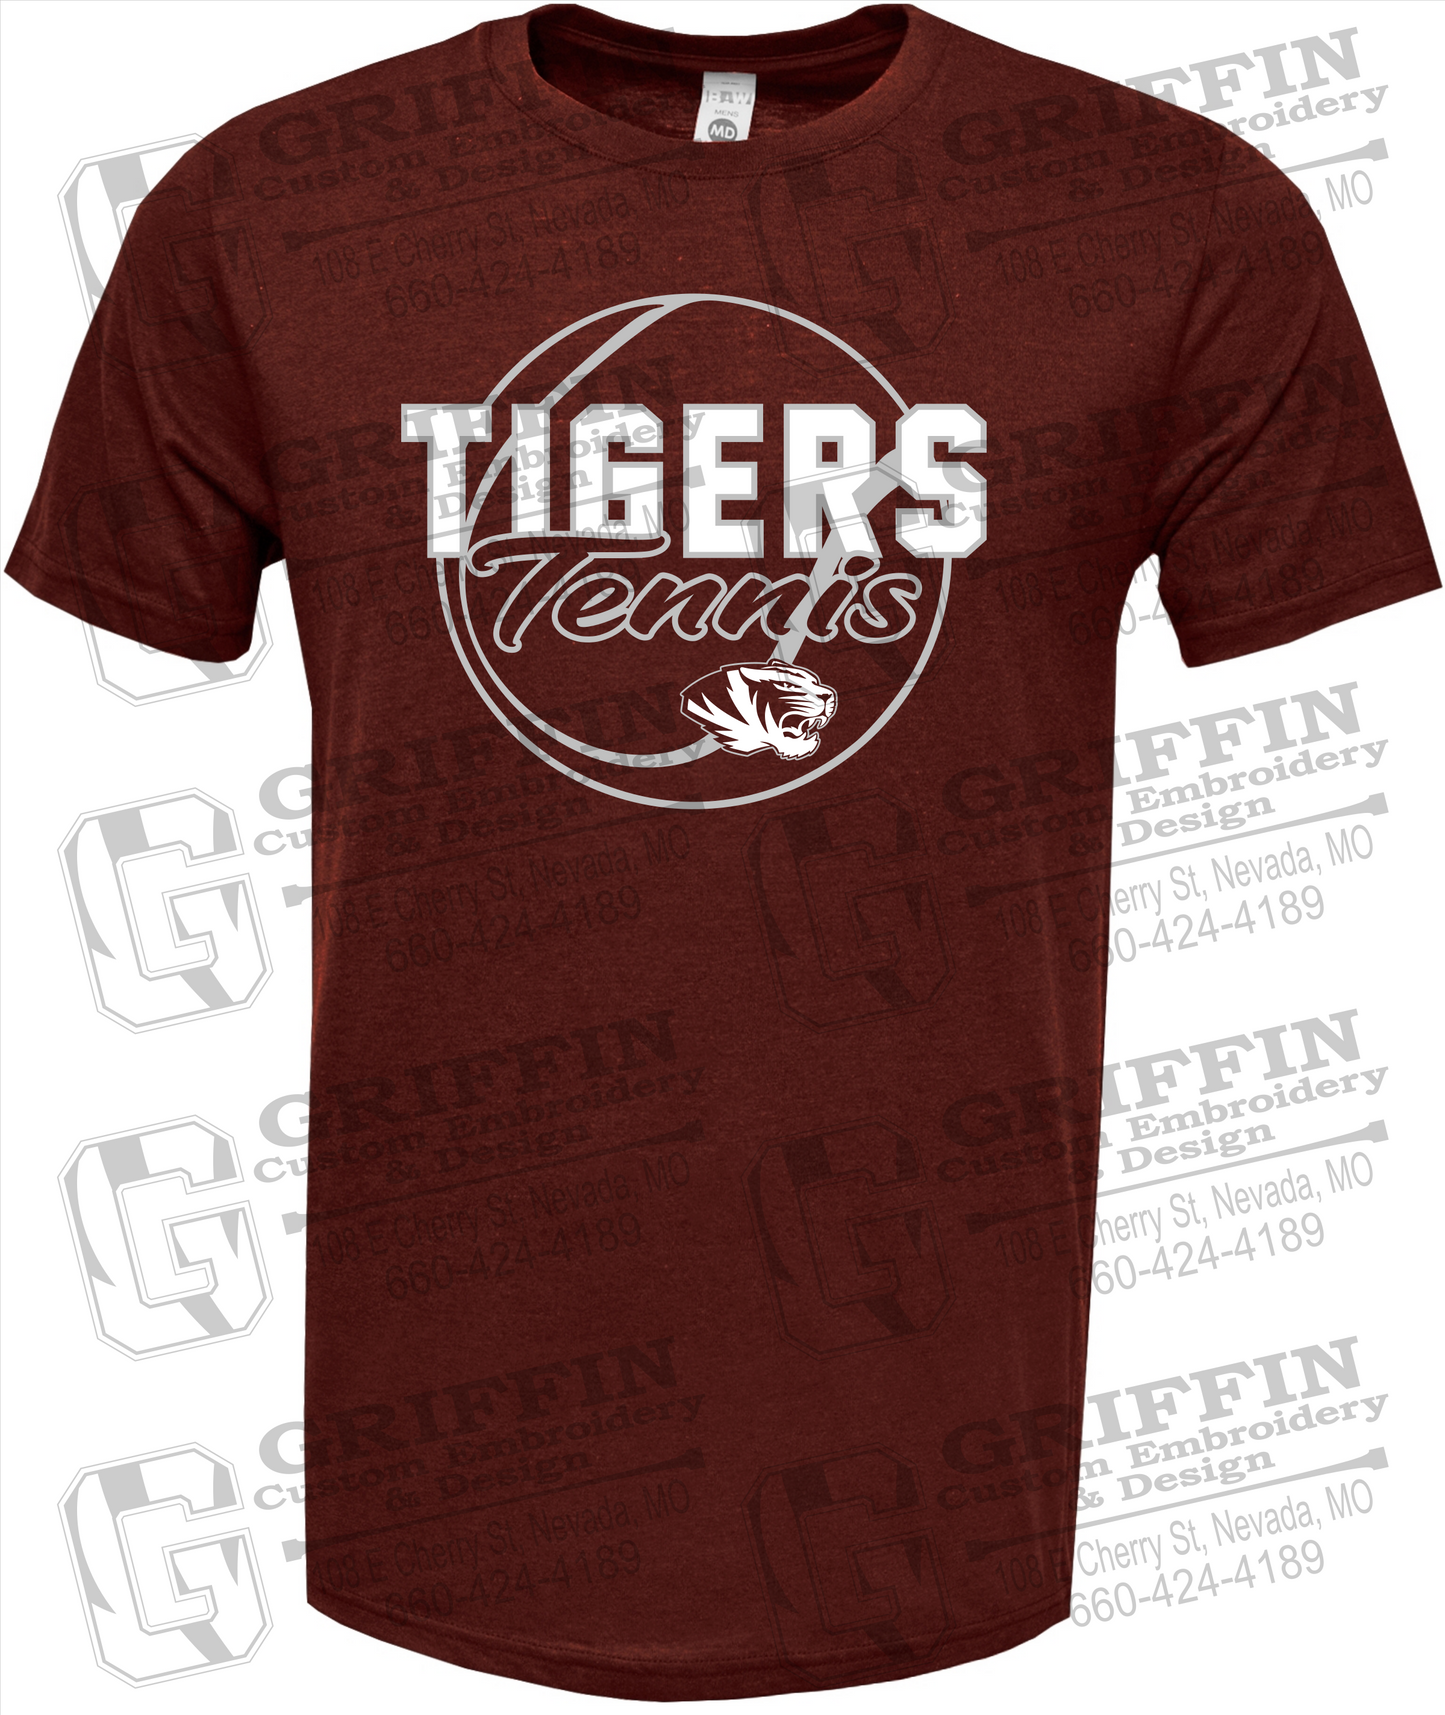 Soft-Tek Short Sleeve T-Shirt - Tennis - Nevada Tigers 23-X